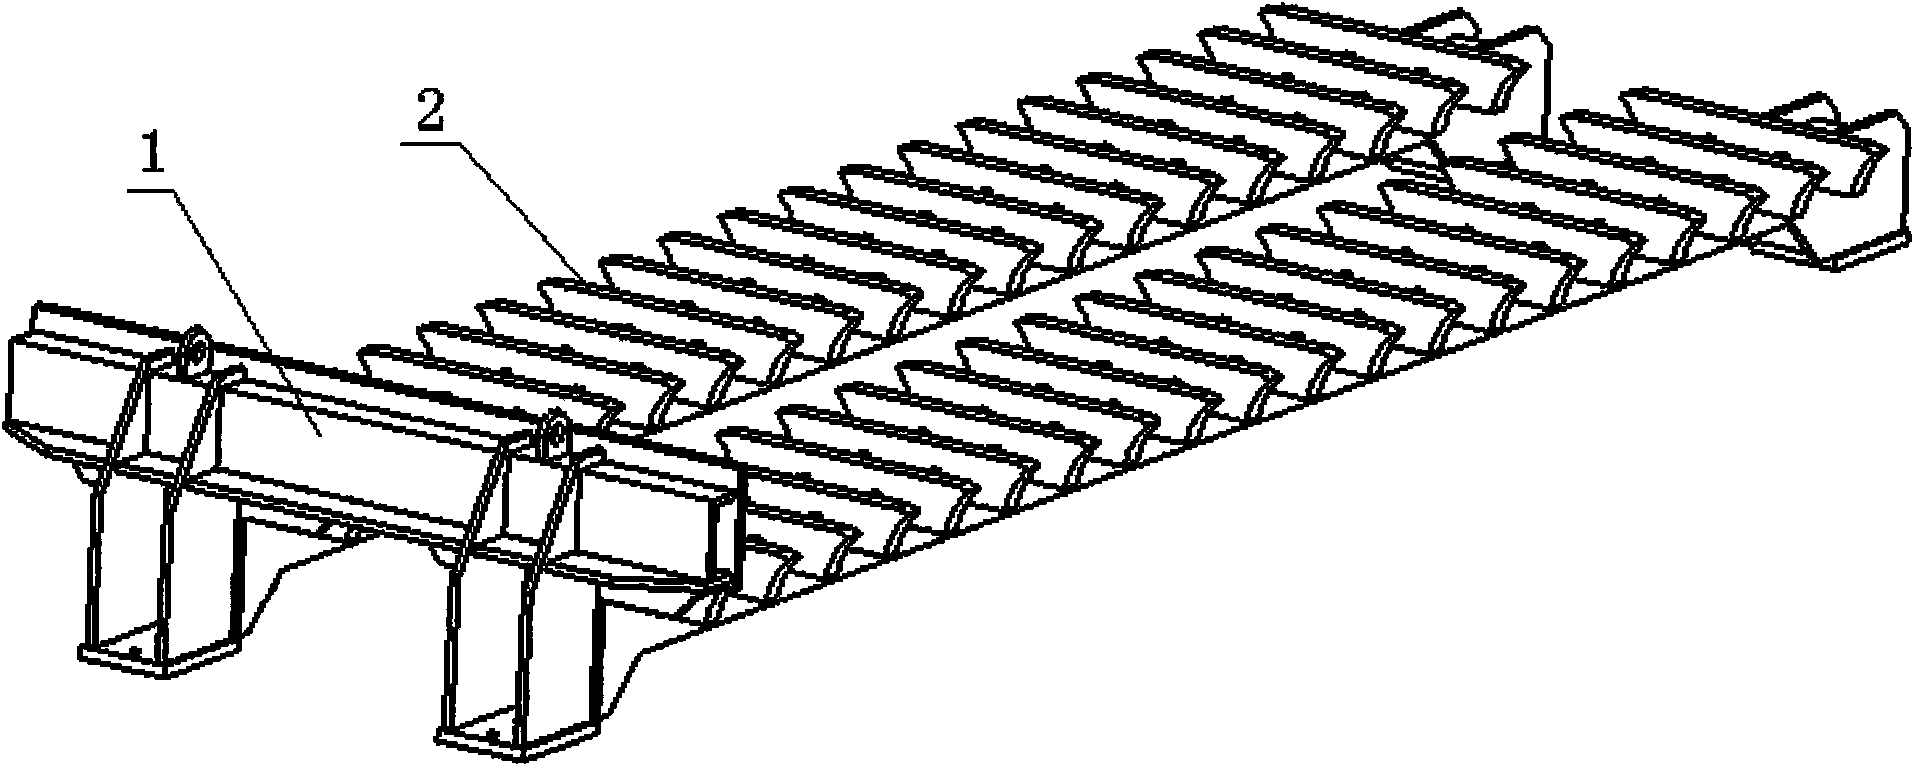 Manufacturing method of steel-rolling cooling bed roller-oriented support platform